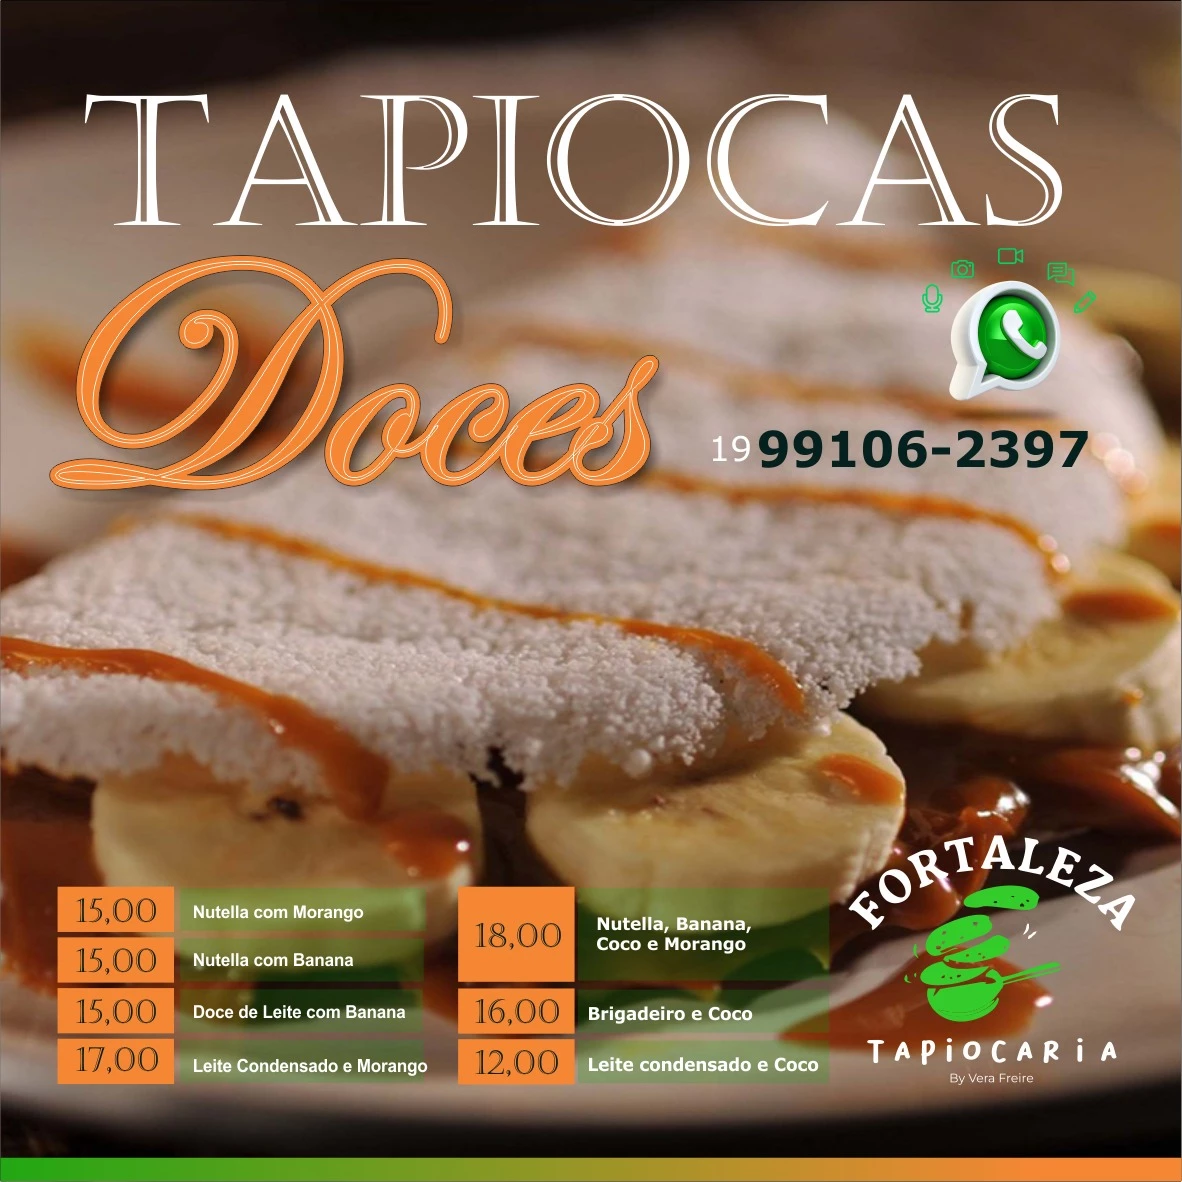 
Propaganda para Tapiocaria sobre tipos de Tapiocas Doces



